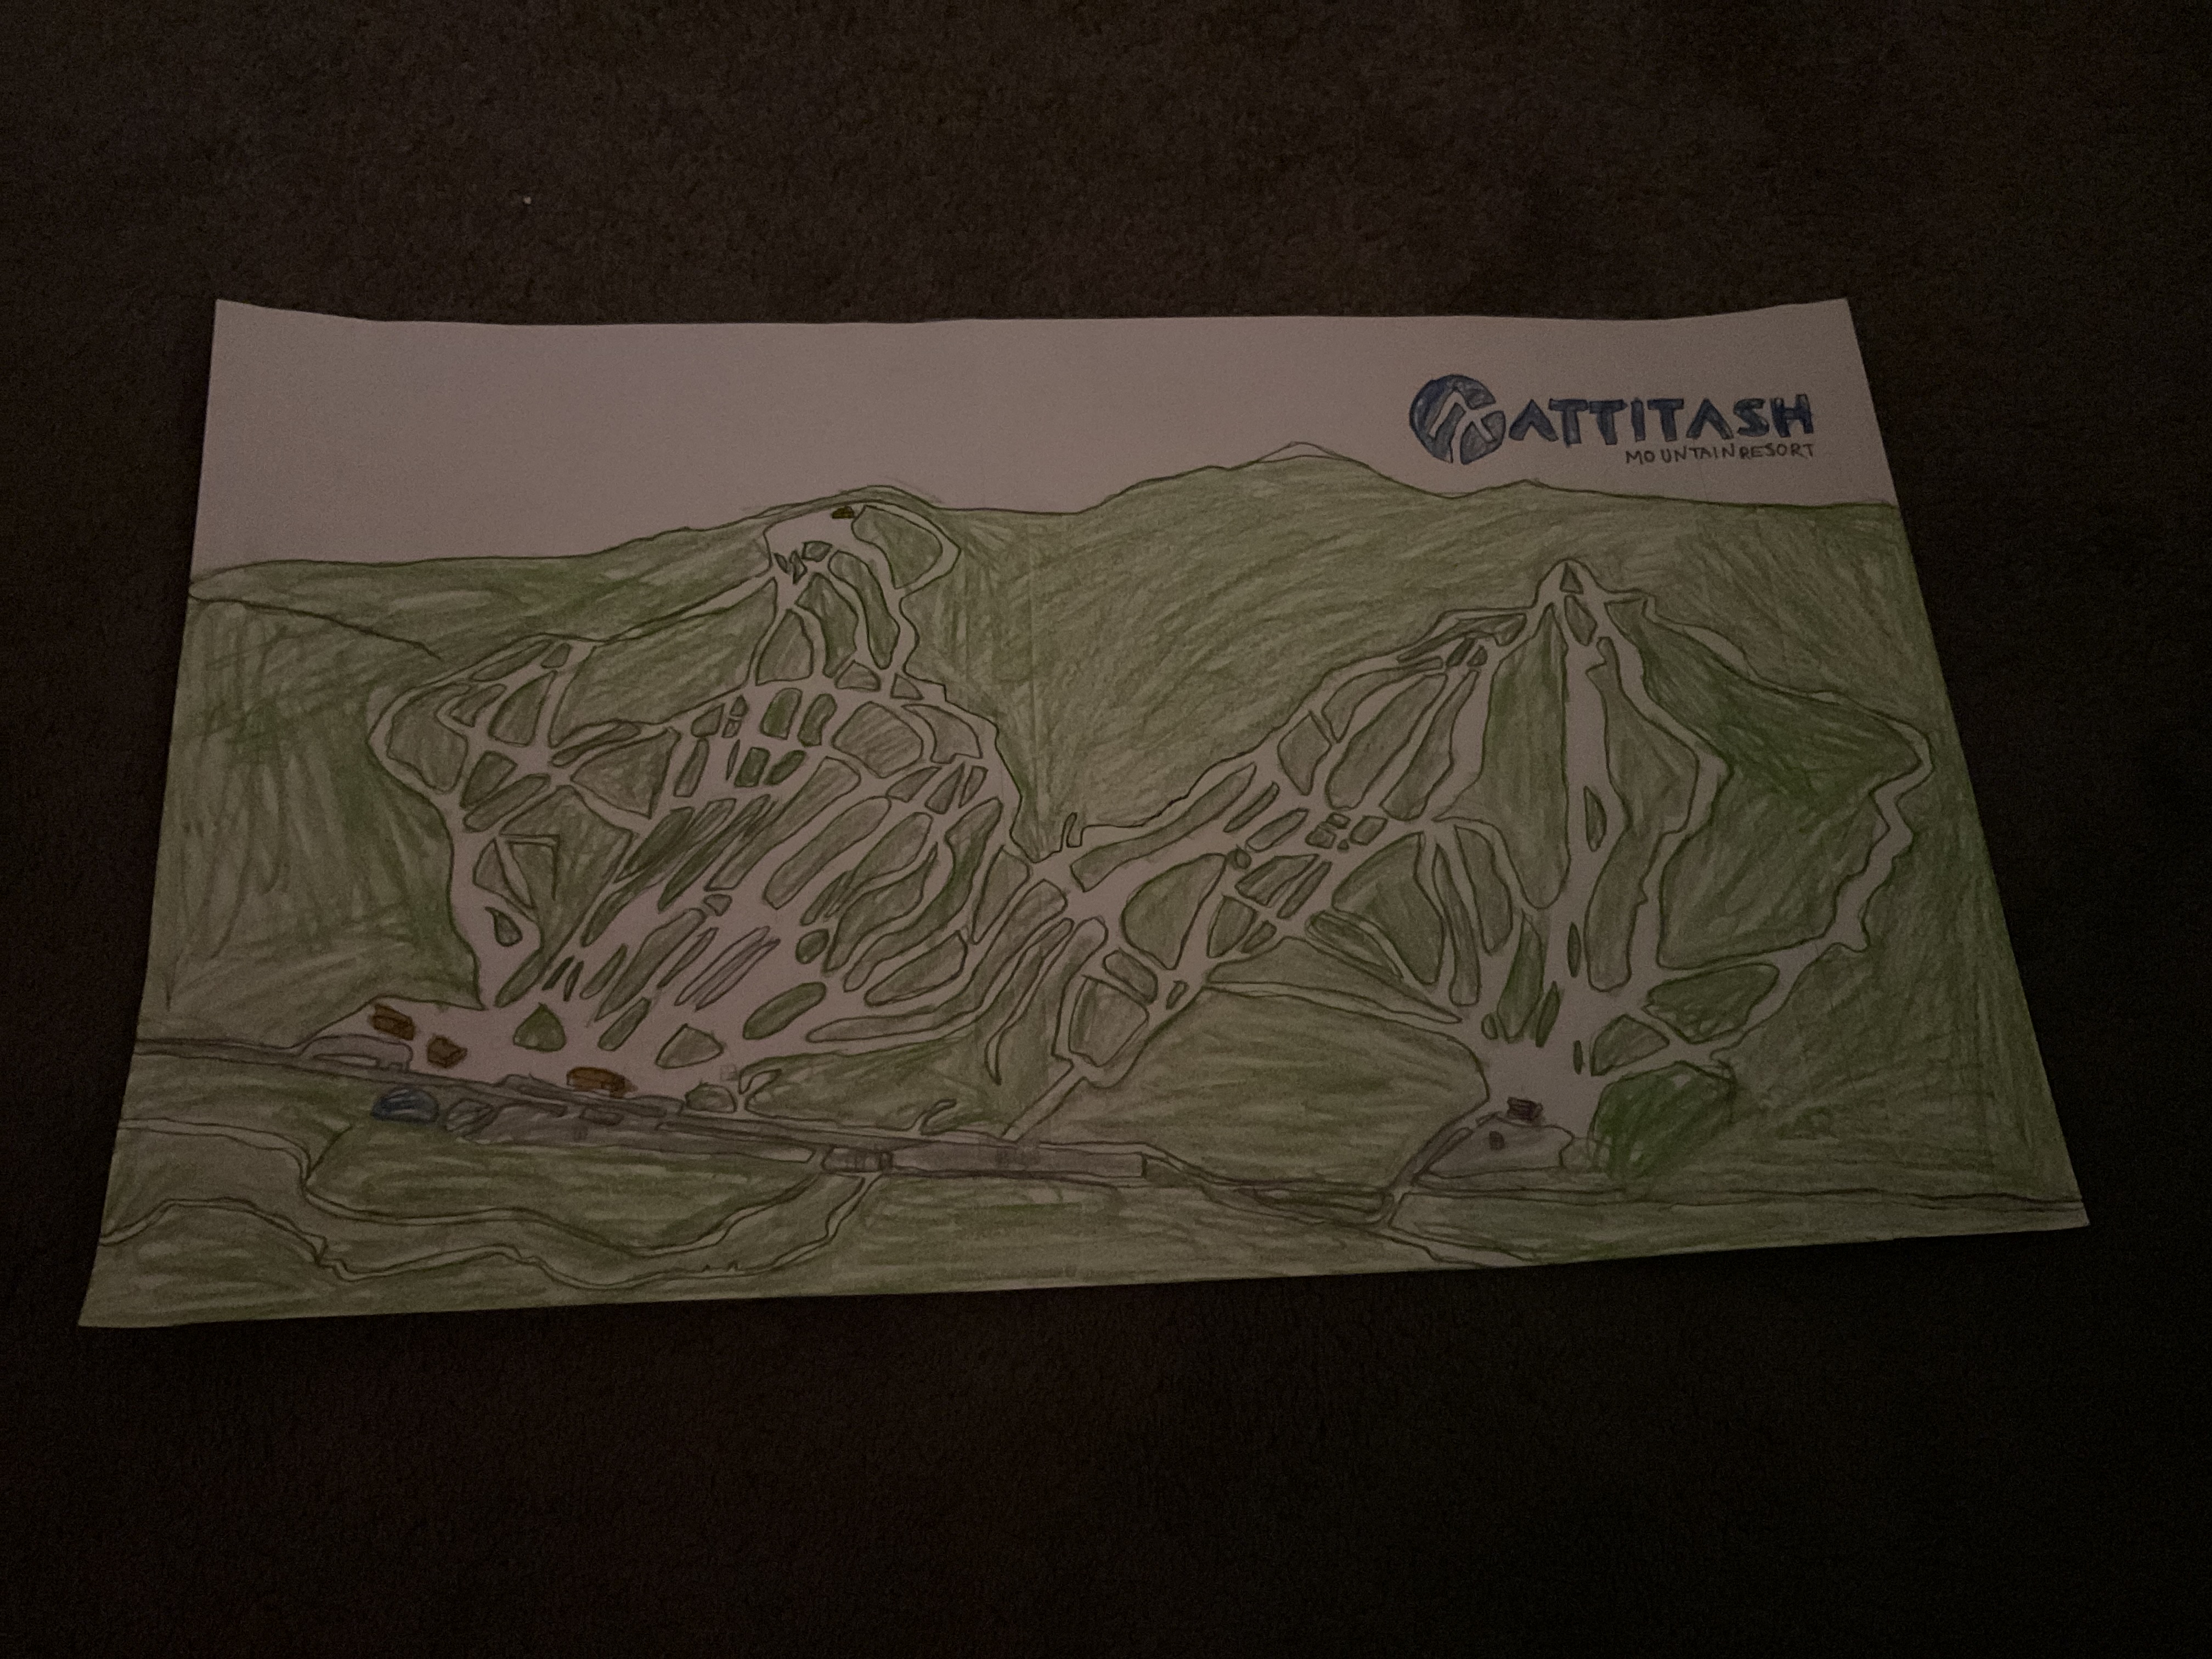 Traced map of attitash drawn & added by Mrdiamond